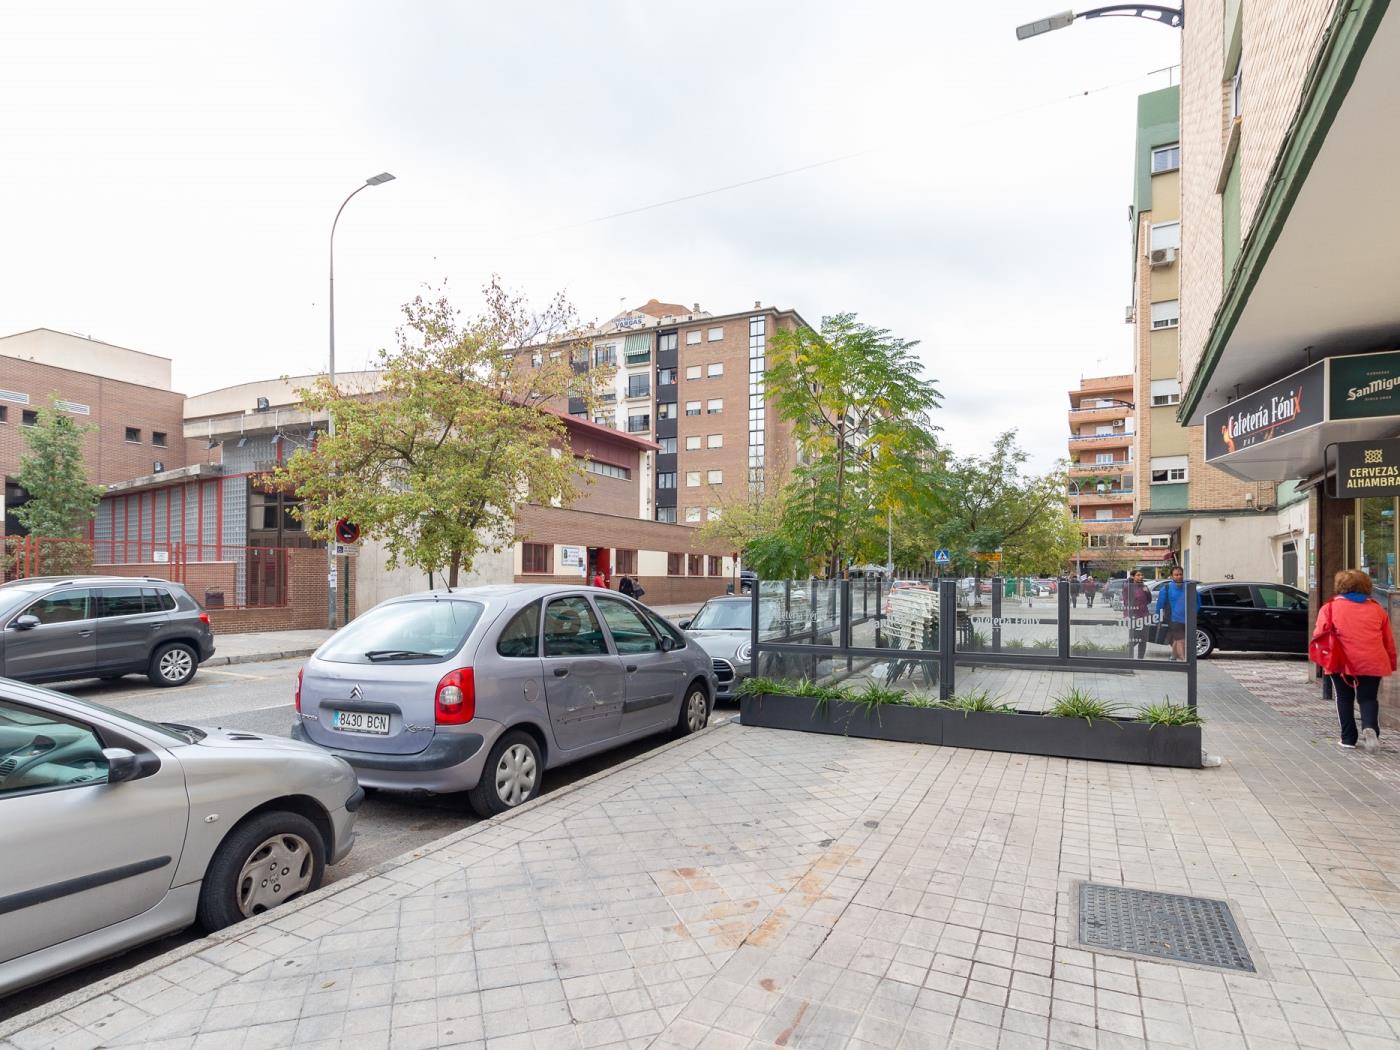 Local comercial de 44 m2 listo para entrar calle Pintor Maldonado 6, Granada en Granada